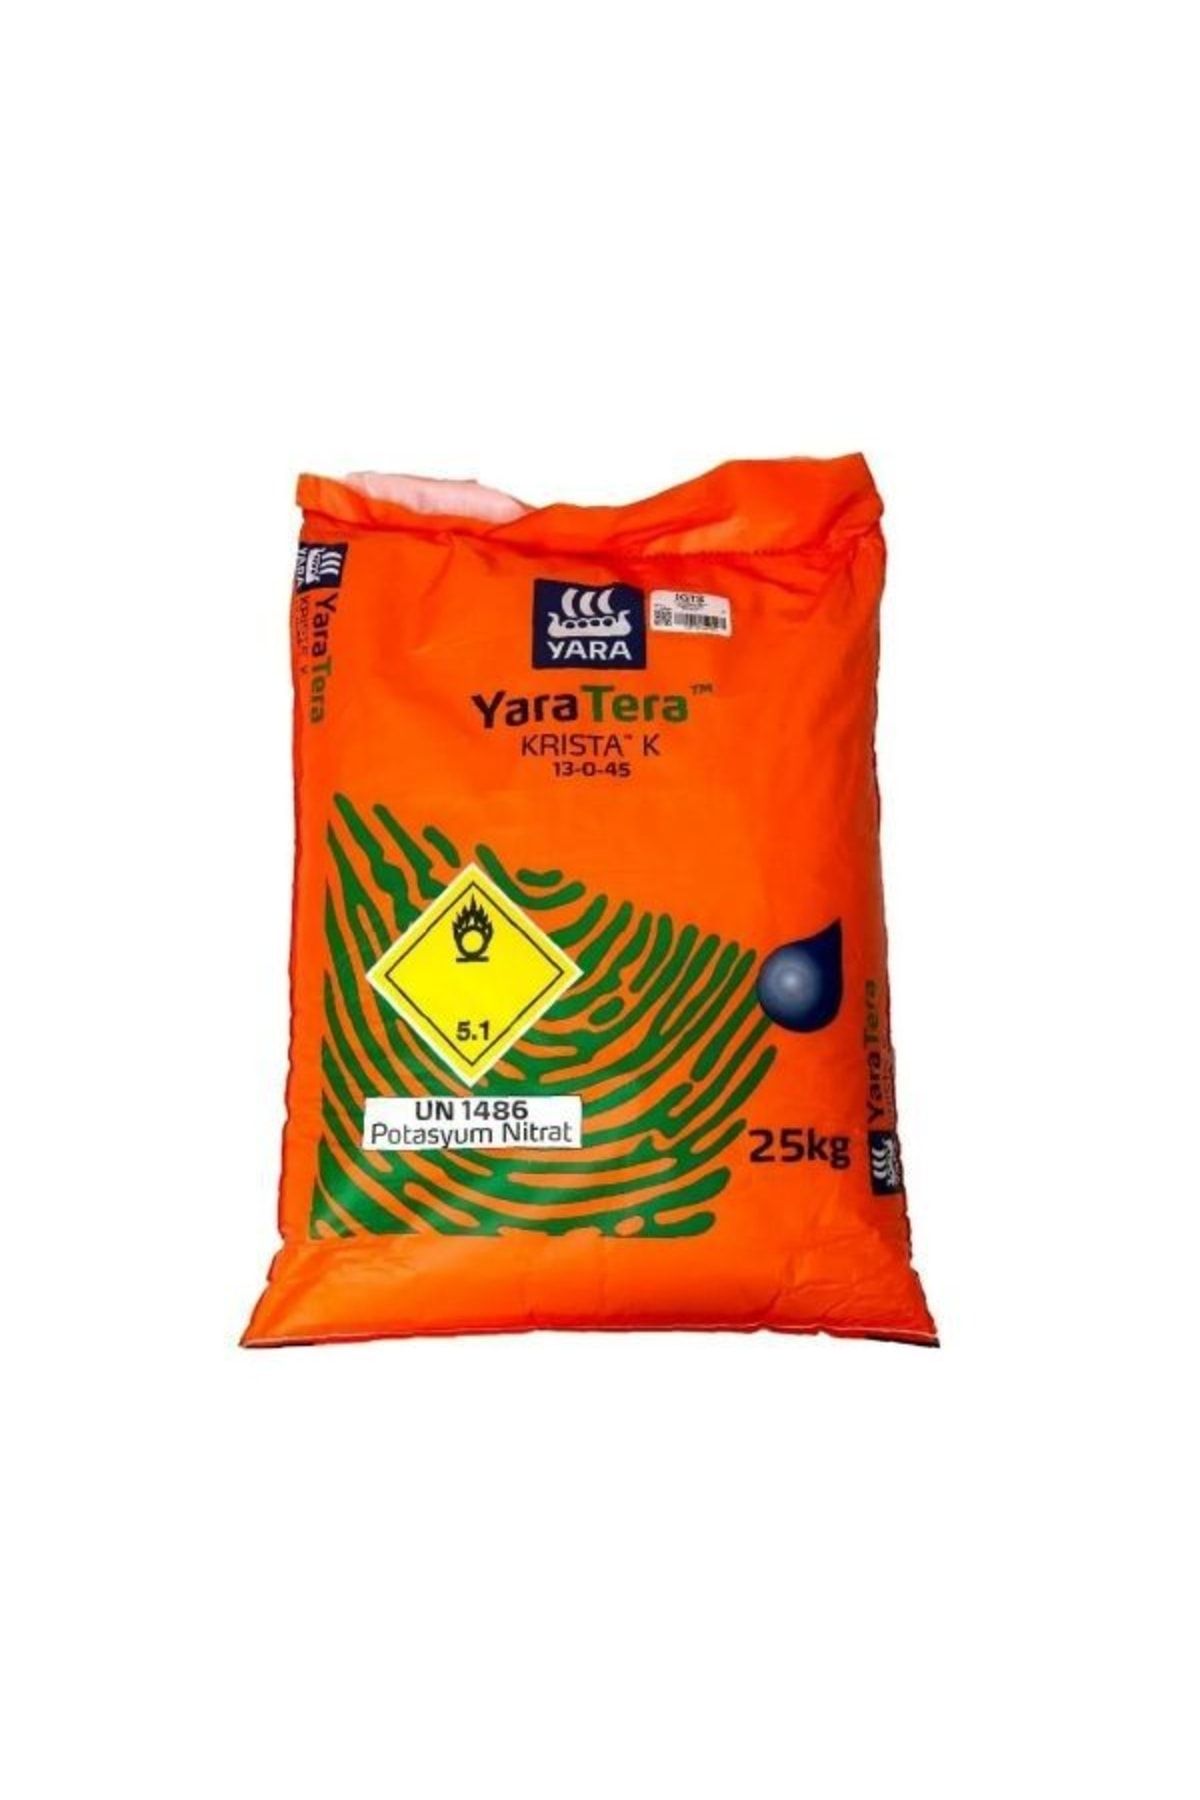 YaraTera Krista K (potasyum Nitrat) 13-0-45 Damlama Gübresi 25 kg